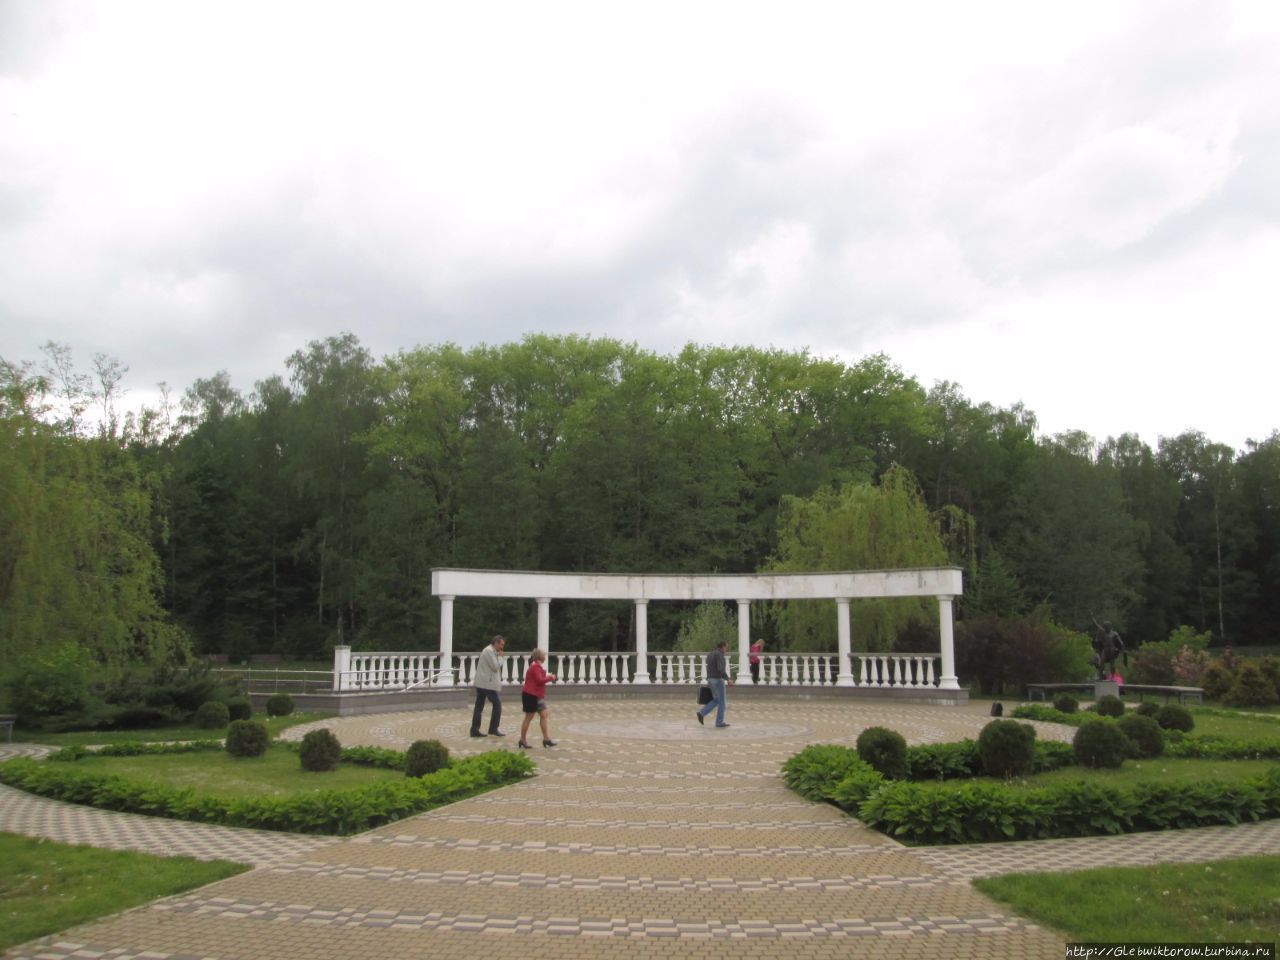 Прогулка по Ботаническому саду — от входа до озера Минск, Беларусь